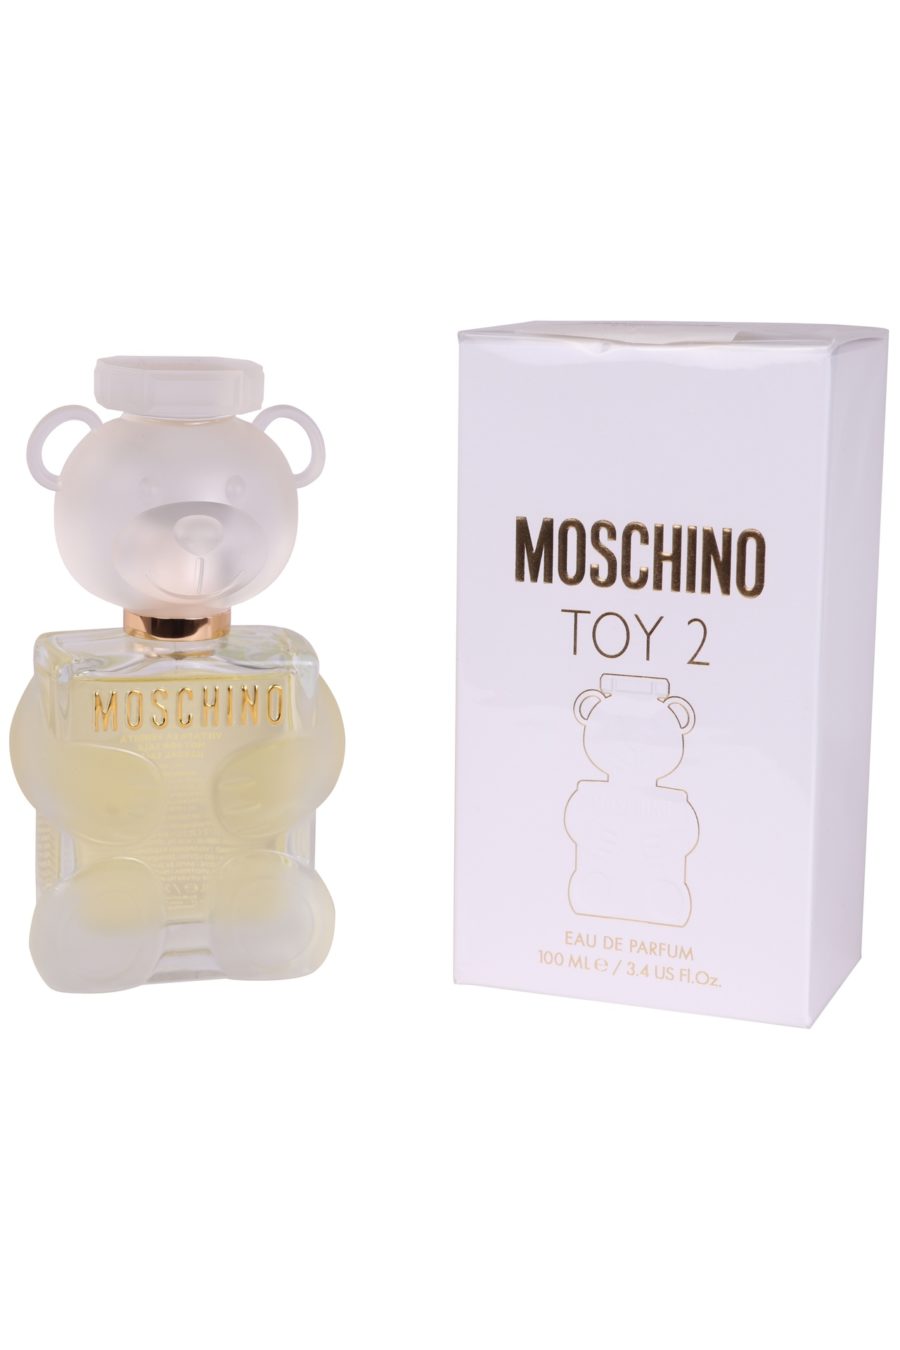 Perfume Moschino Toy 2 100 ml - e3d70ed752b5719037fd1862bd4df4873b6843c3